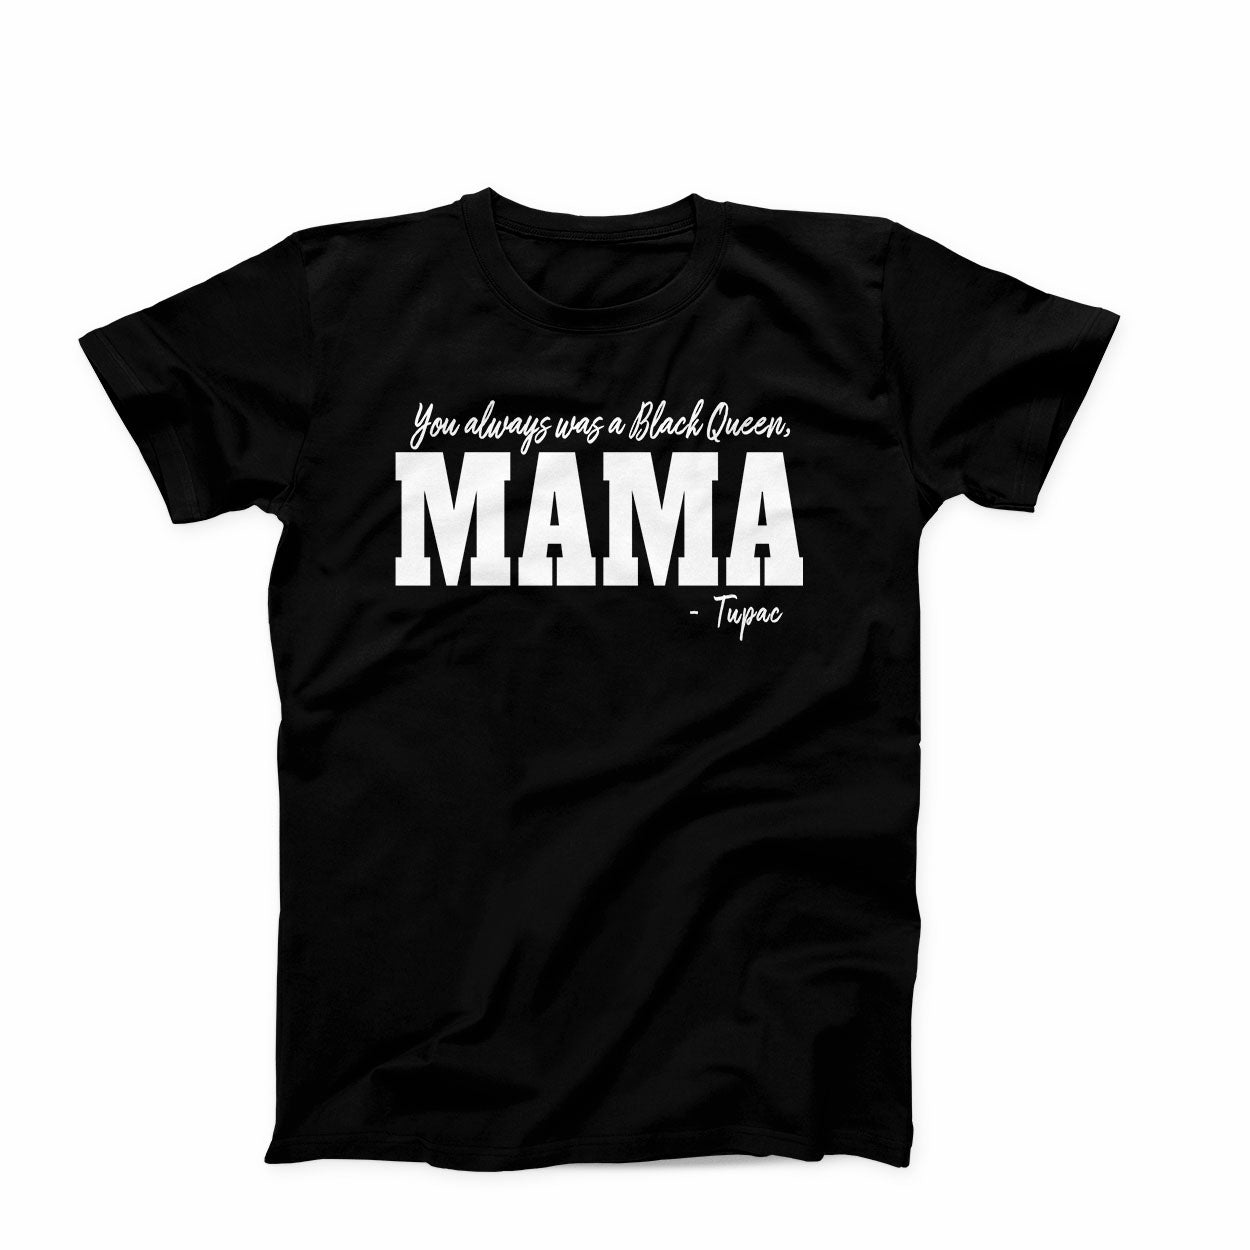 T-shirt:  Dear Mama You Always Was a Black Queen